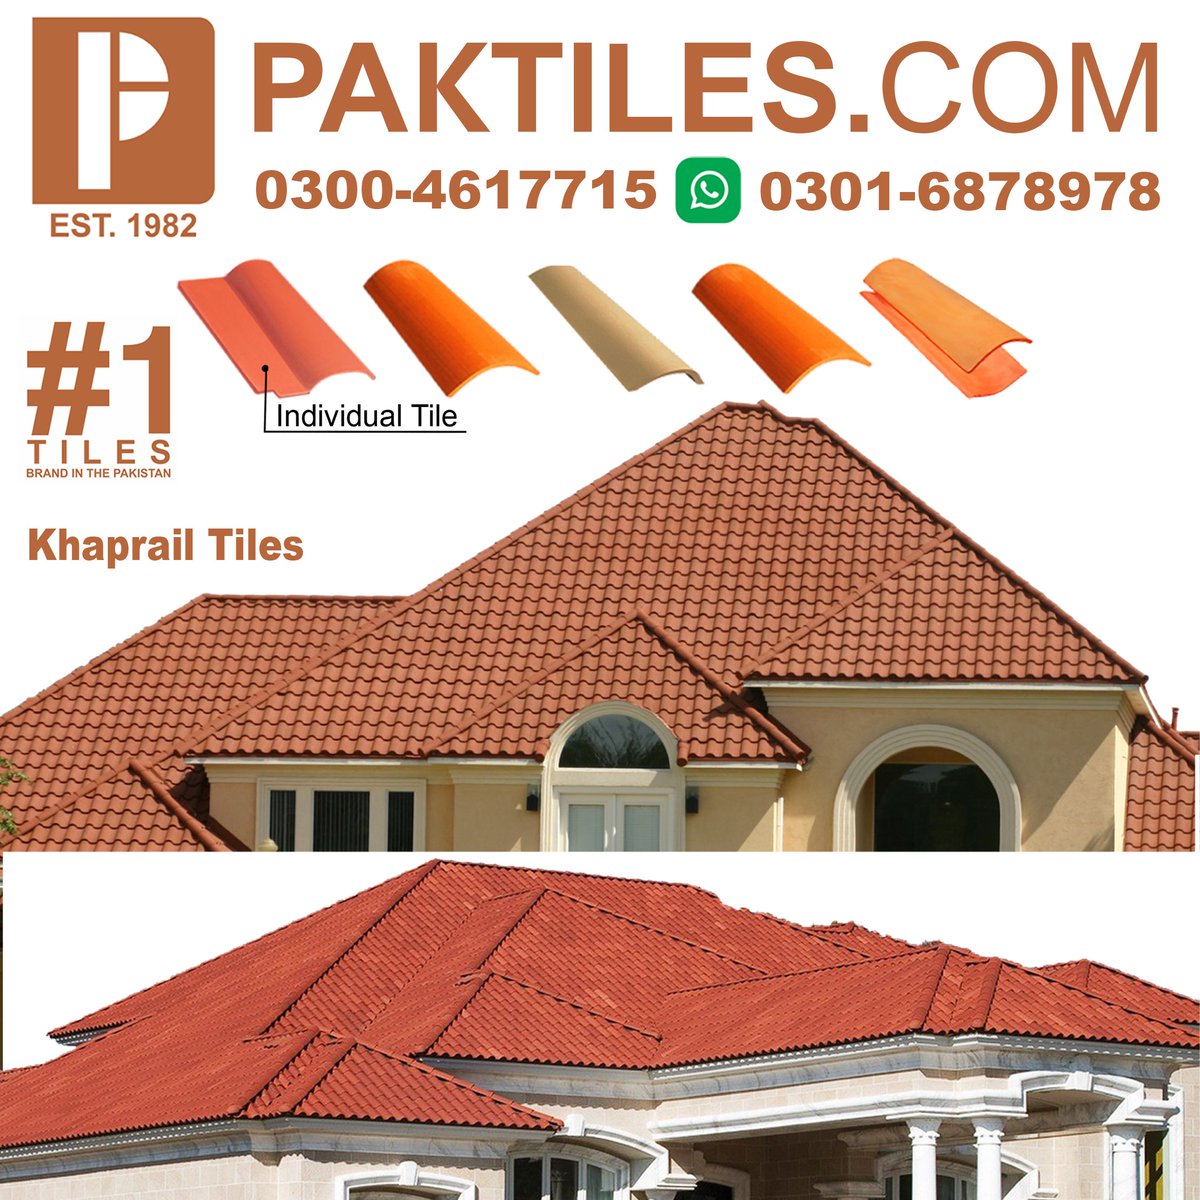 Khaprail Tiles Manufacturer Pakistan, Khaprail Tiles Industry Company Peshawar, Multan, Faisalabad, Gujranwala #khaprail #tiles #walltiles #Mosaic #floortiles #interiordesign #homedecor #homedecoration #viral #home #house #bricktiles #3dtiles #redbricks #gutkatile #gutkabricks